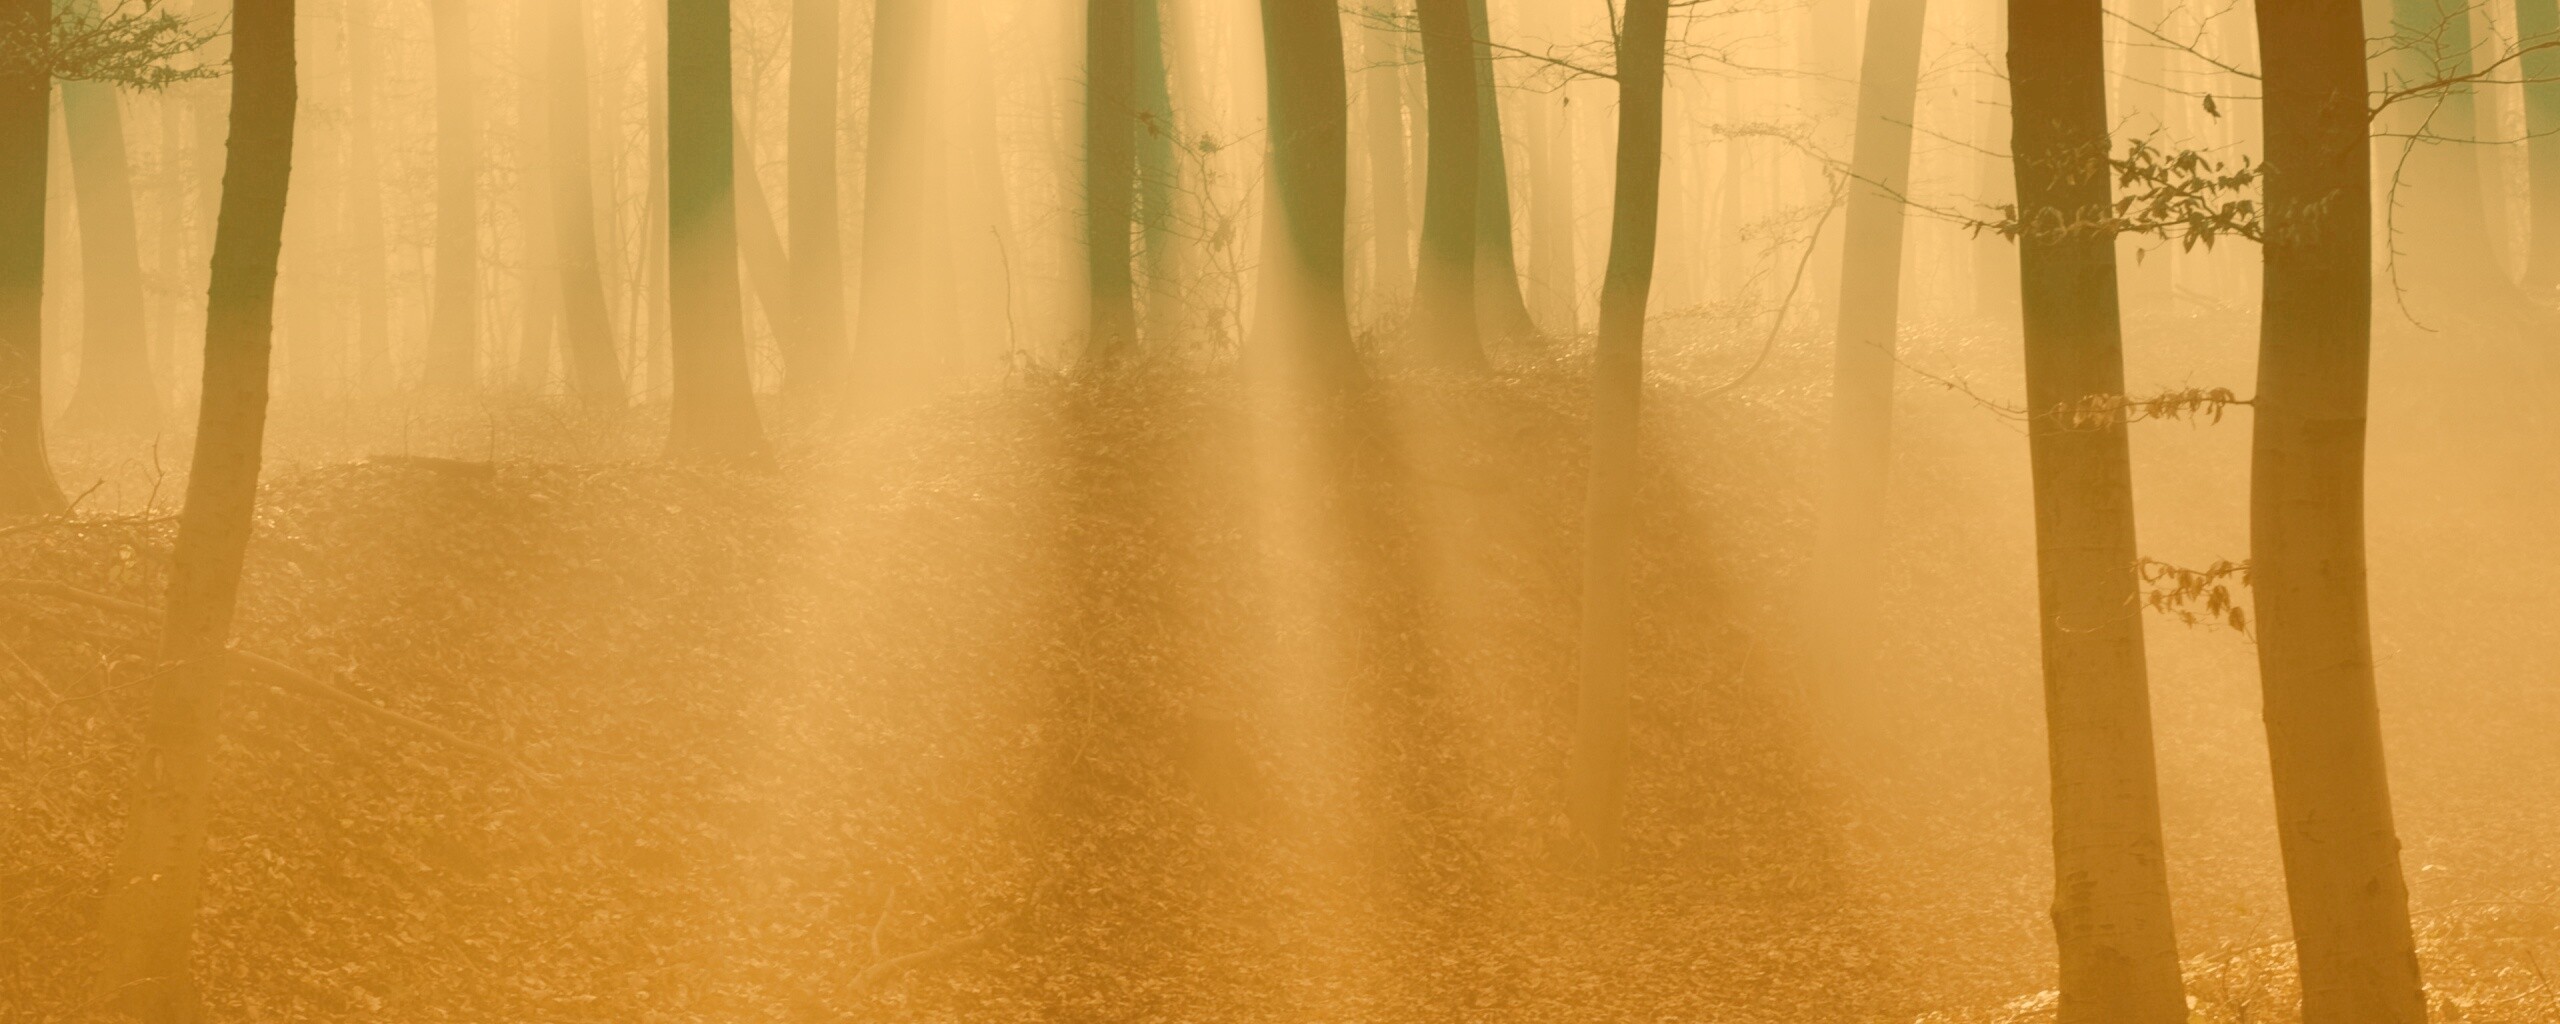 Мистические лес обои